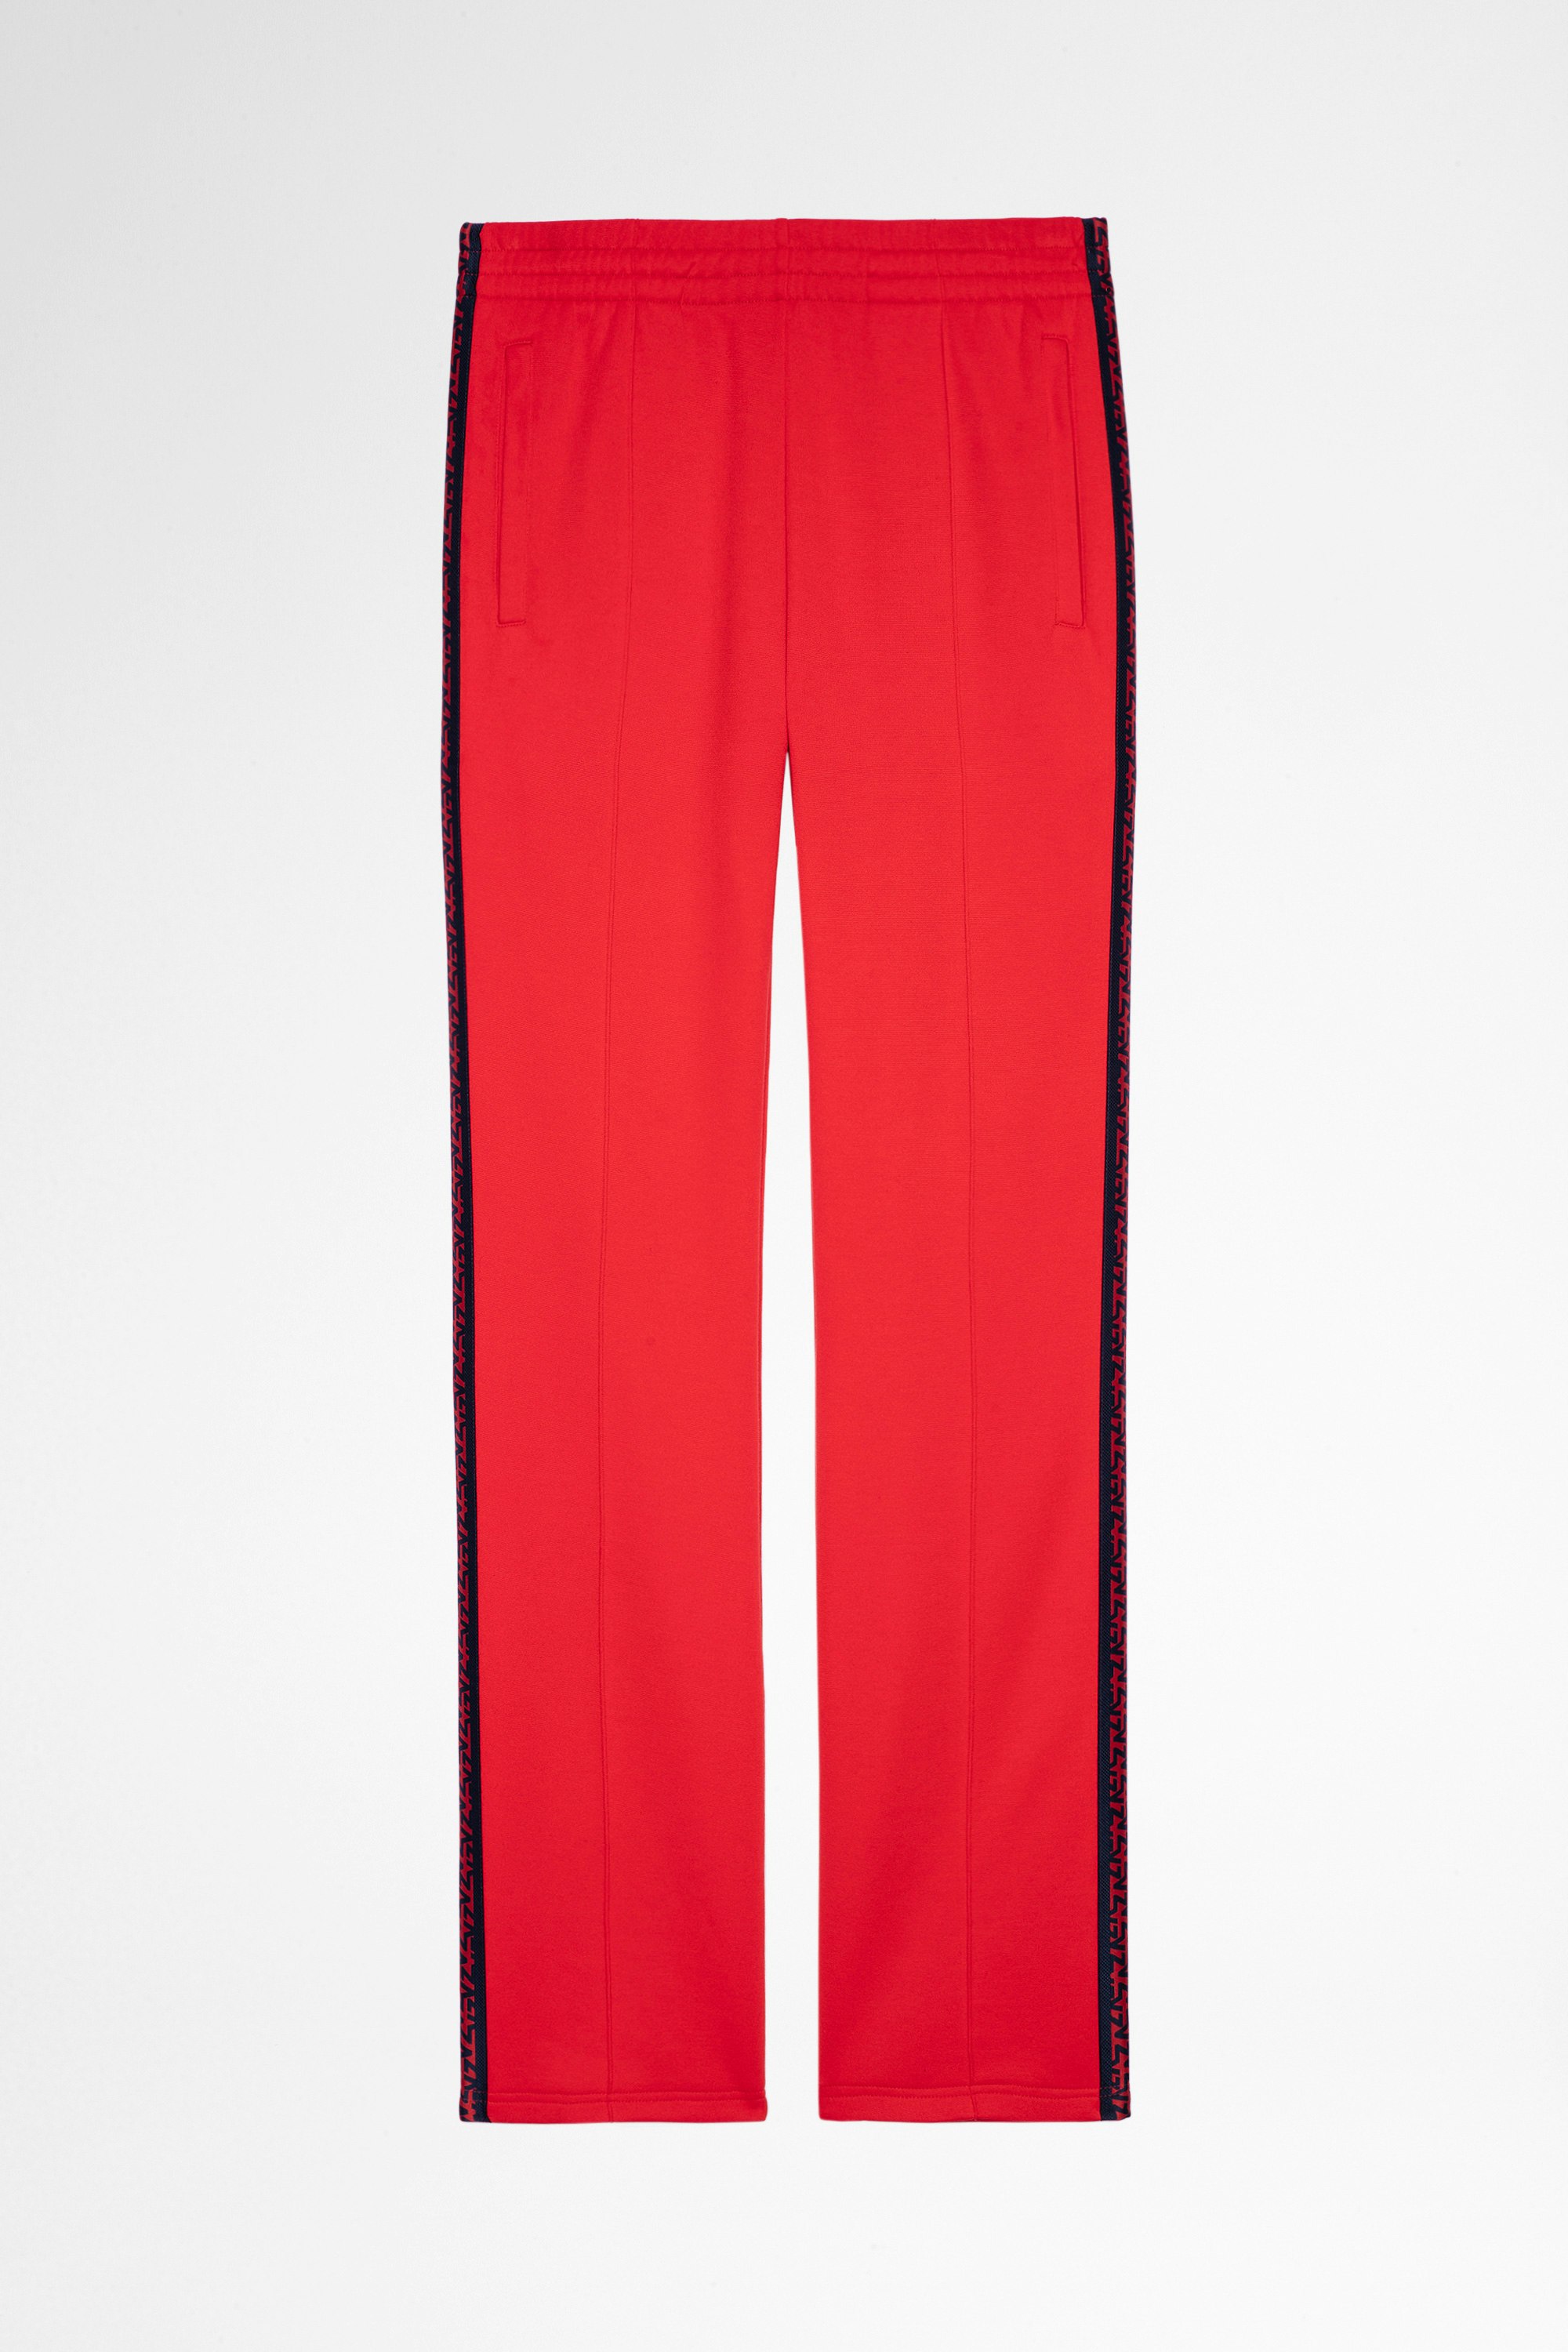 Pantalón Chillyn Pantalón de hombre acampanado rojo con bandas laterales. Confeccionado con fibras procedentes de la agricultura ecológica.